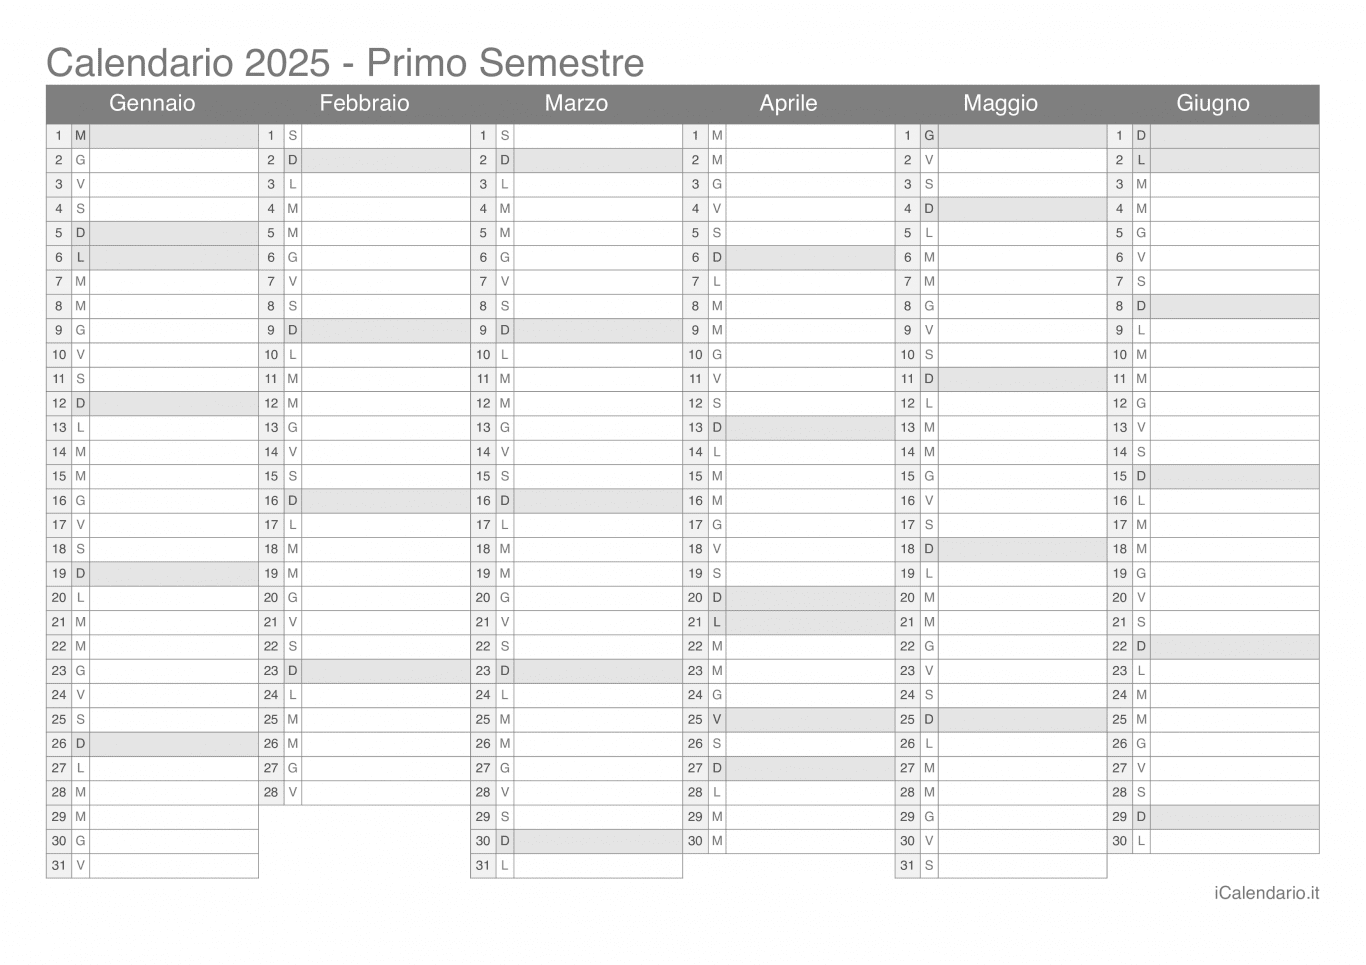 Calendario semestrale 2025